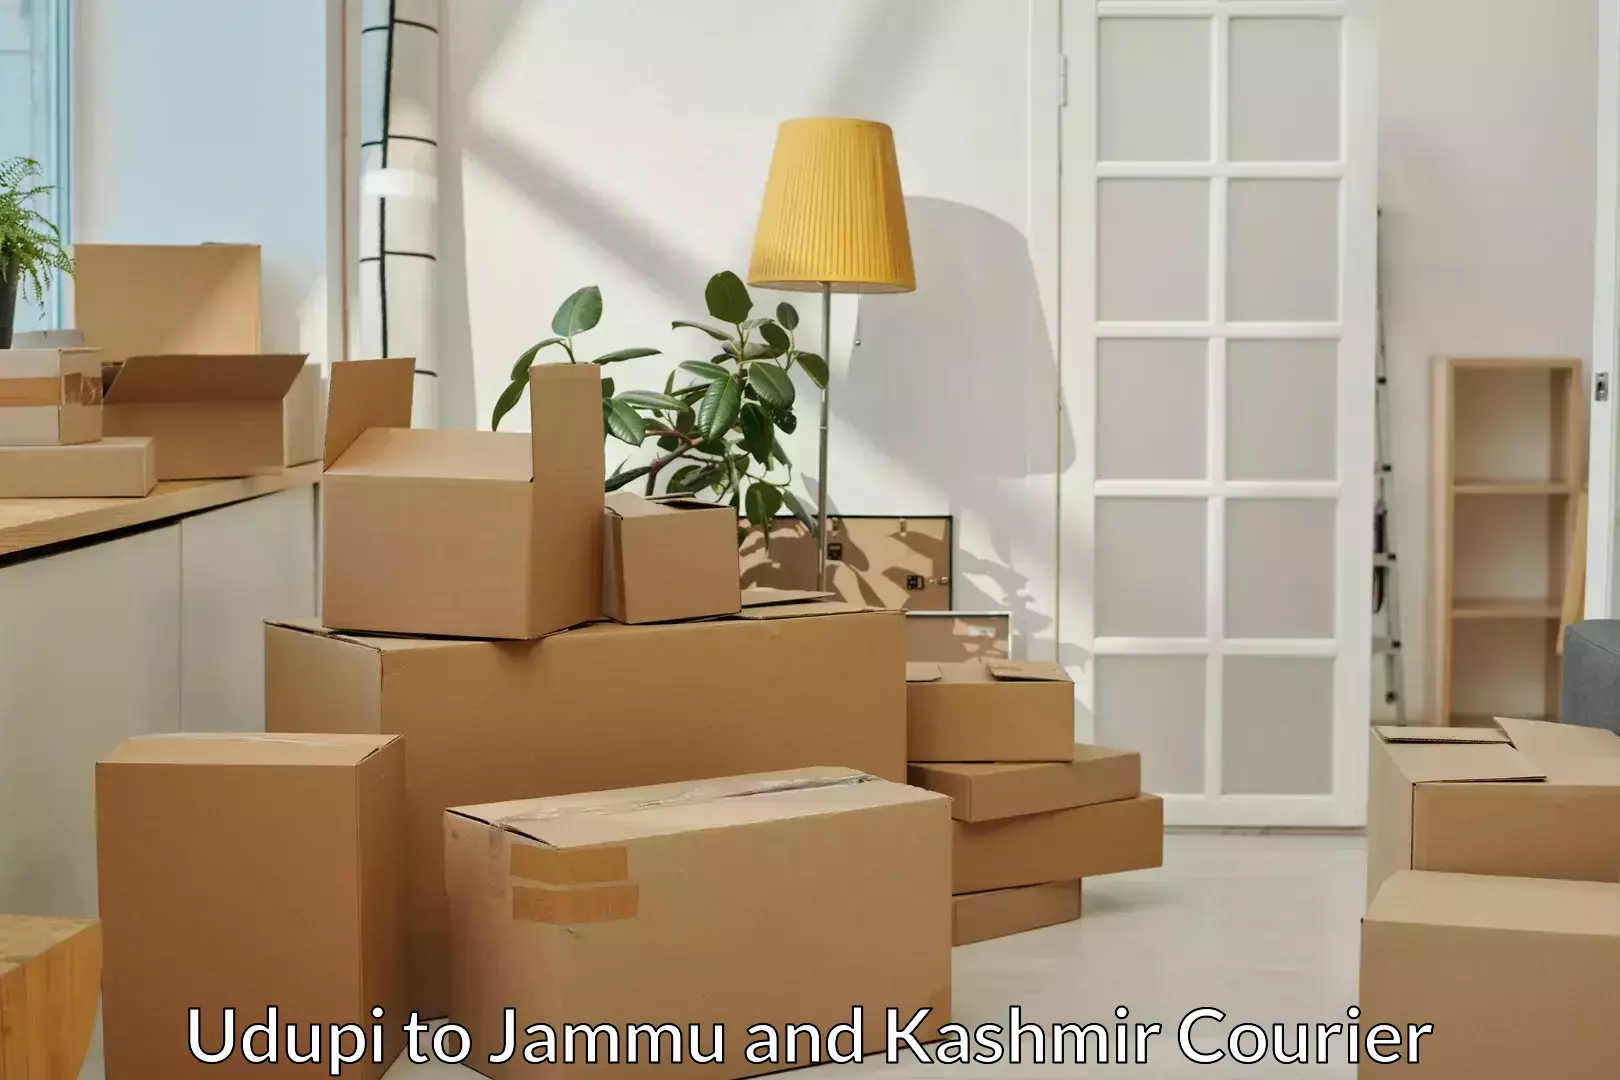 Trusted moving company Udupi to Jammu and Kashmir